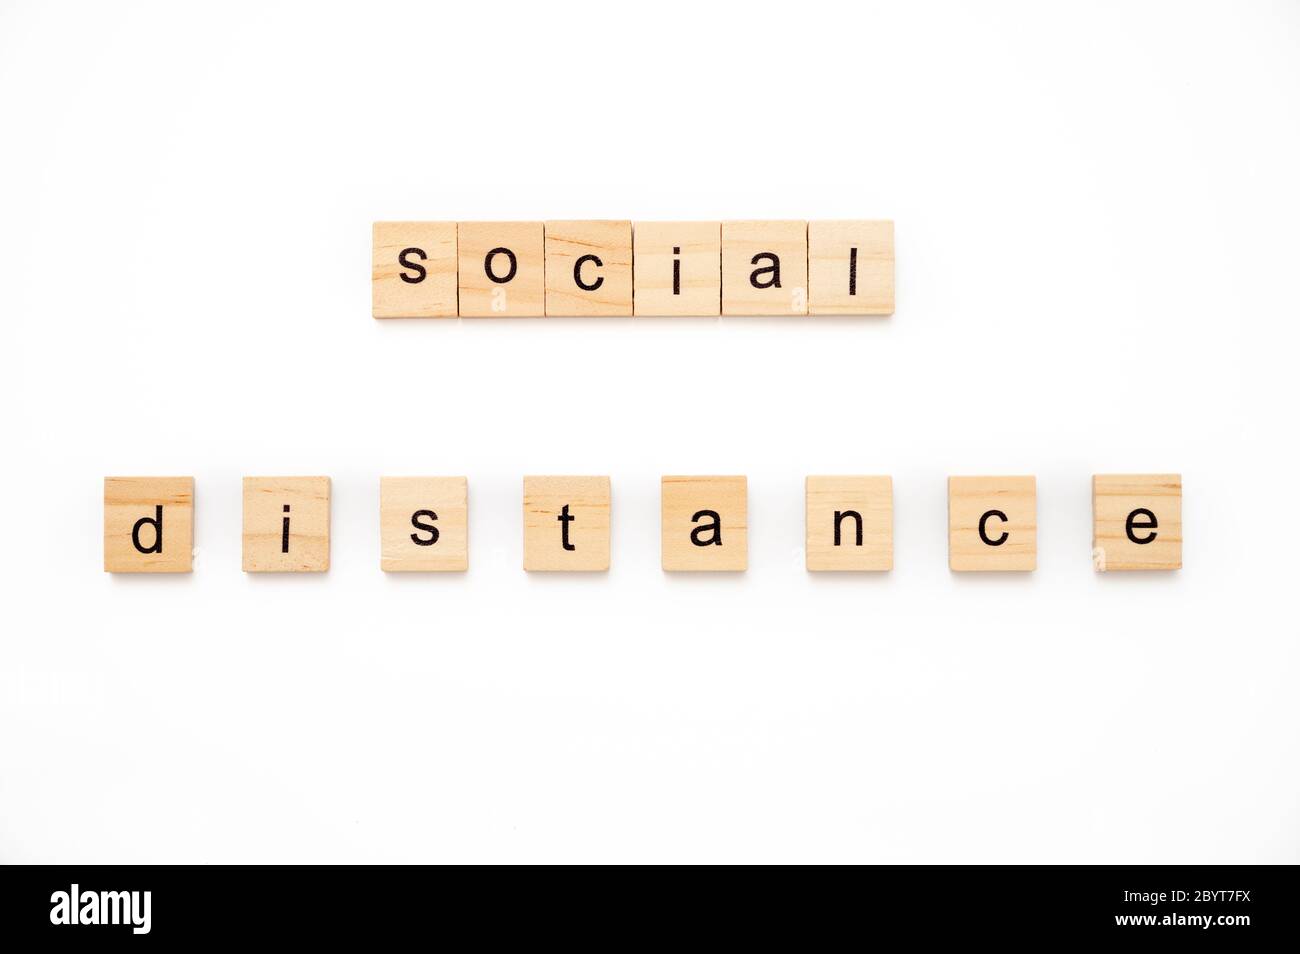 Generic wood scrabble tiles spelling words Social Distance Stock Photo